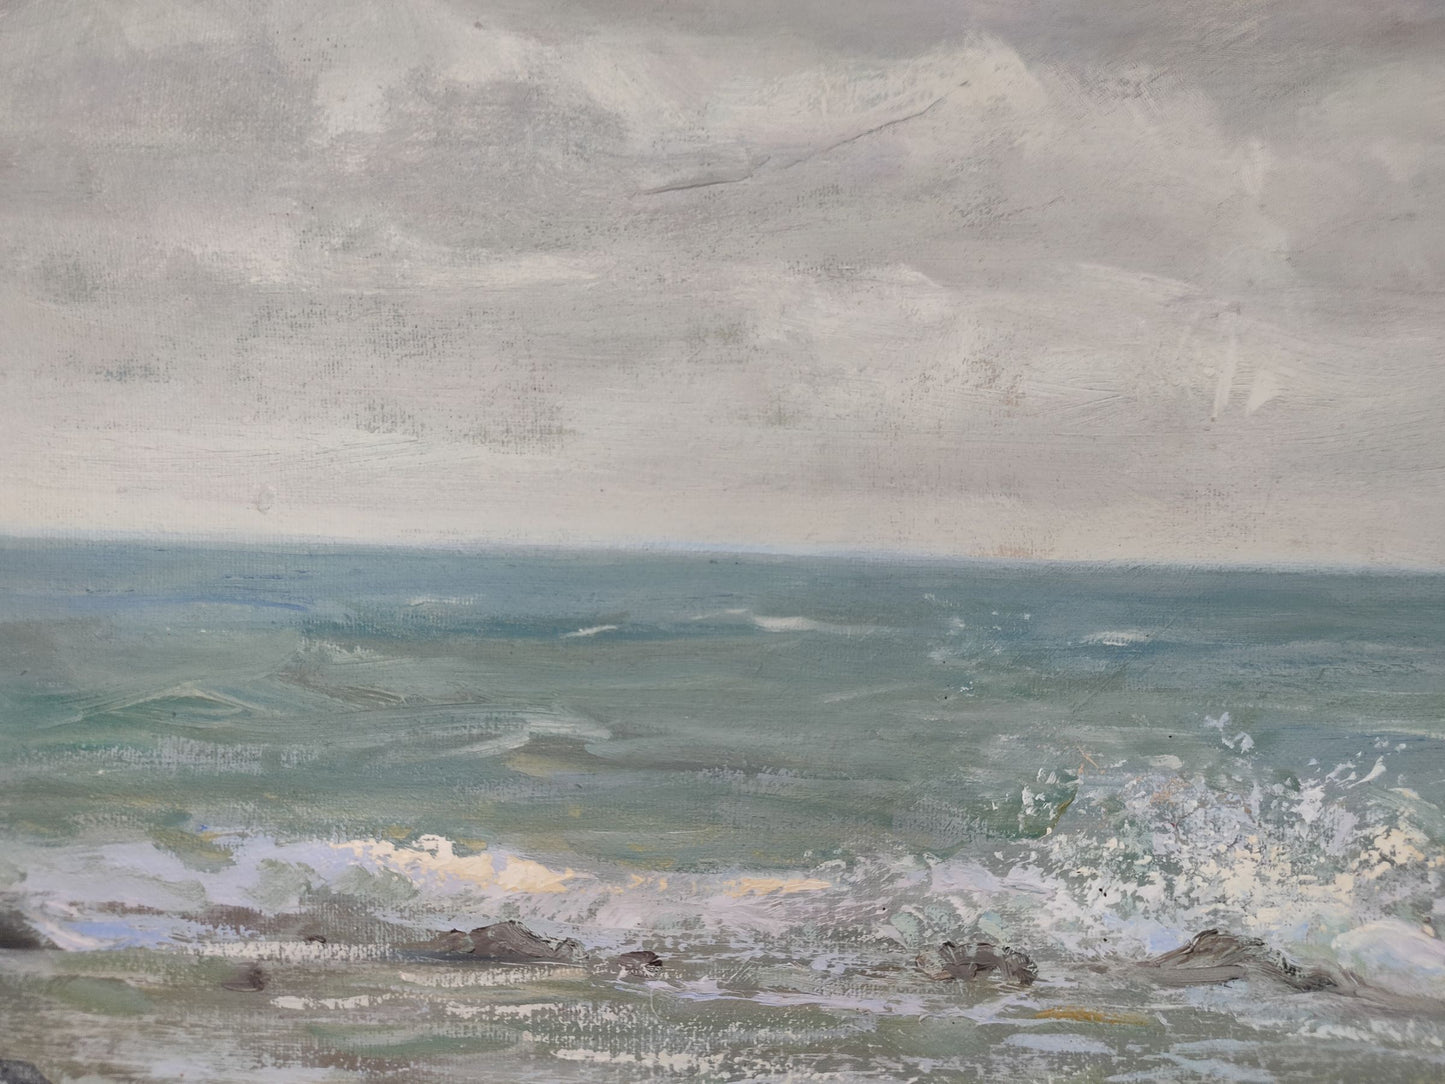 Coastal Bliss: Mishurovsky V. V.'s Oil Depiction of the Azure Sea Shore